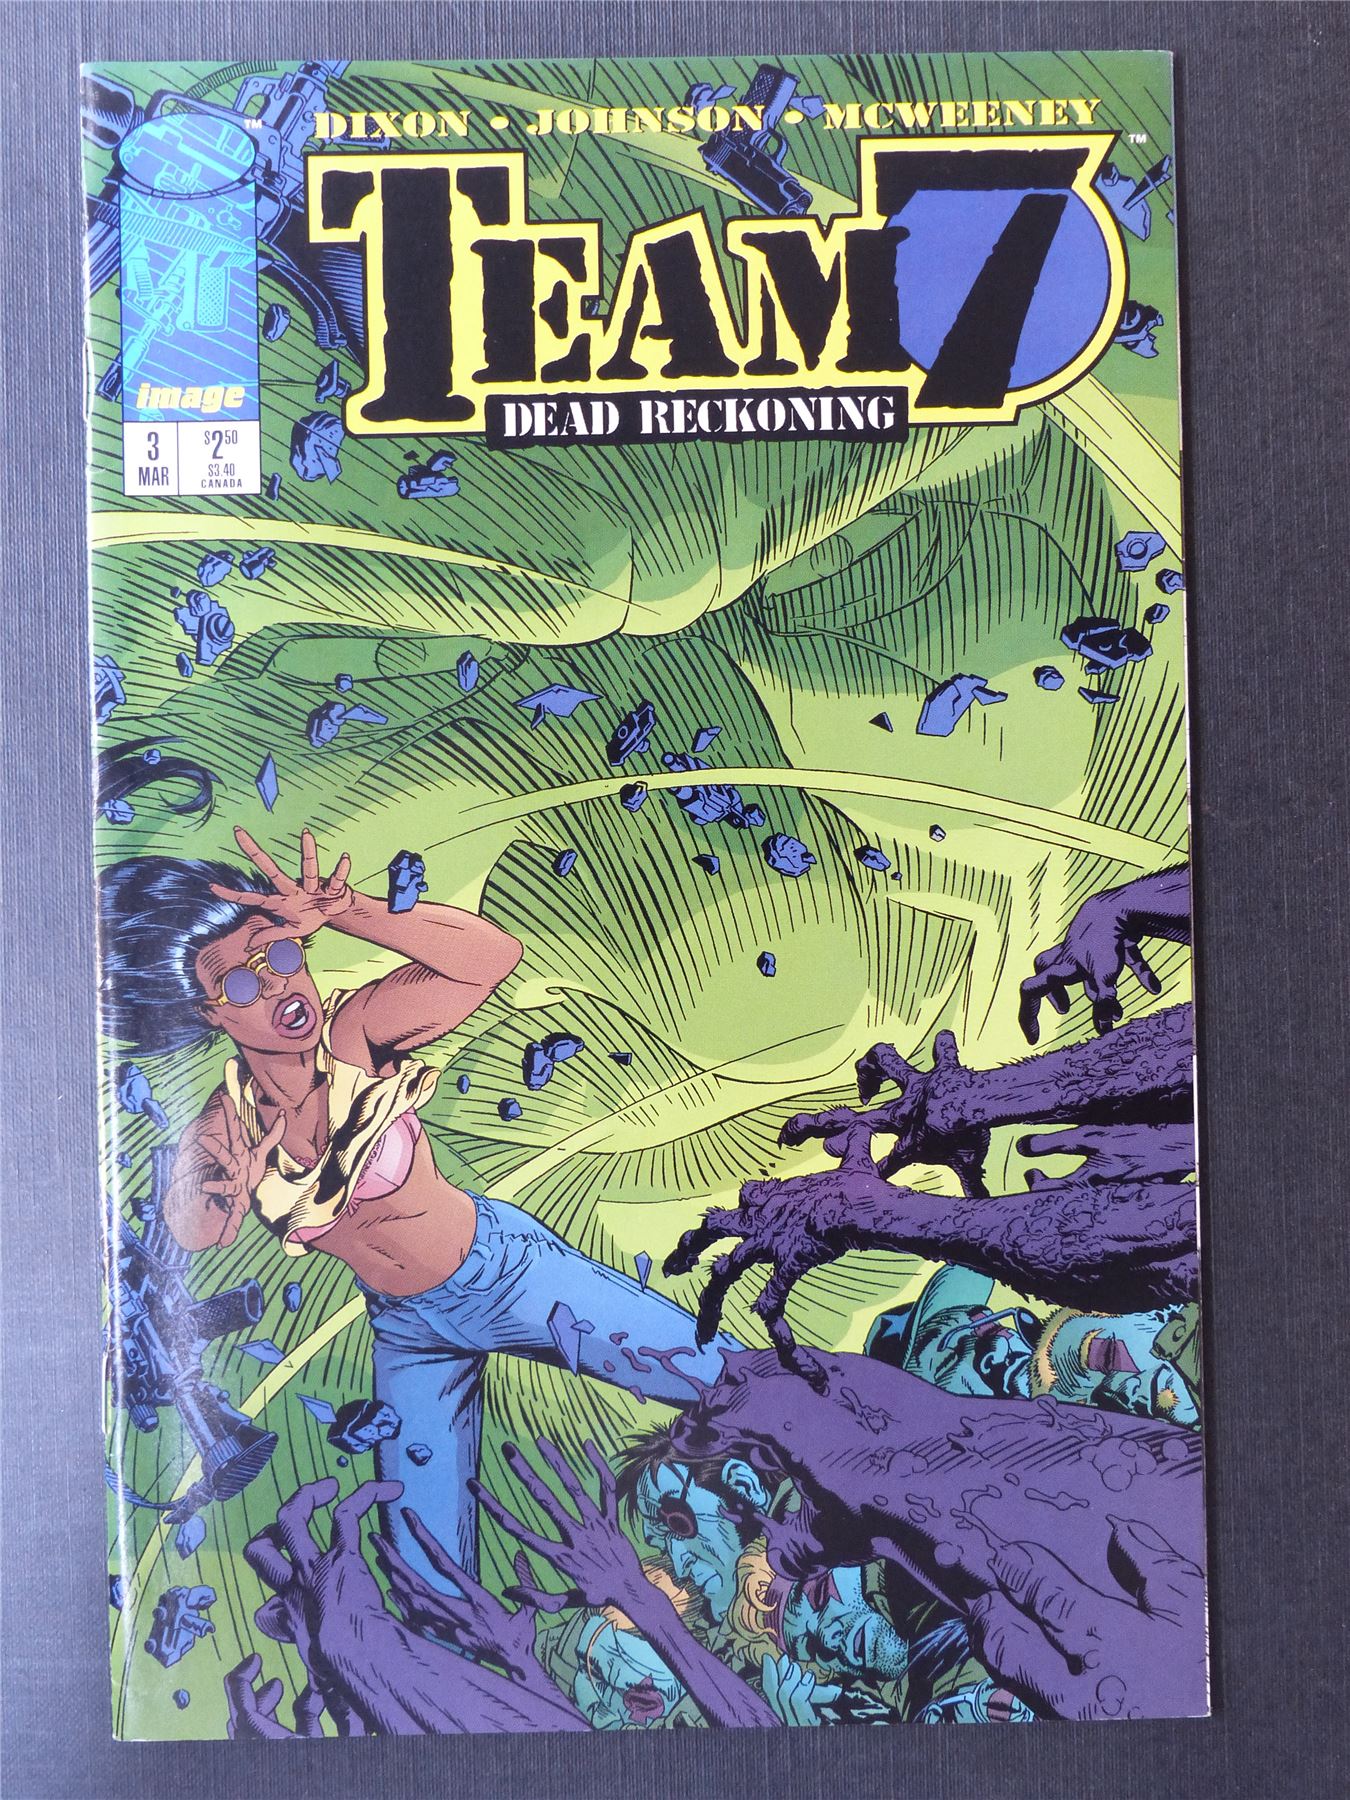 TEAM Seven #3 - Image Comics #2KF